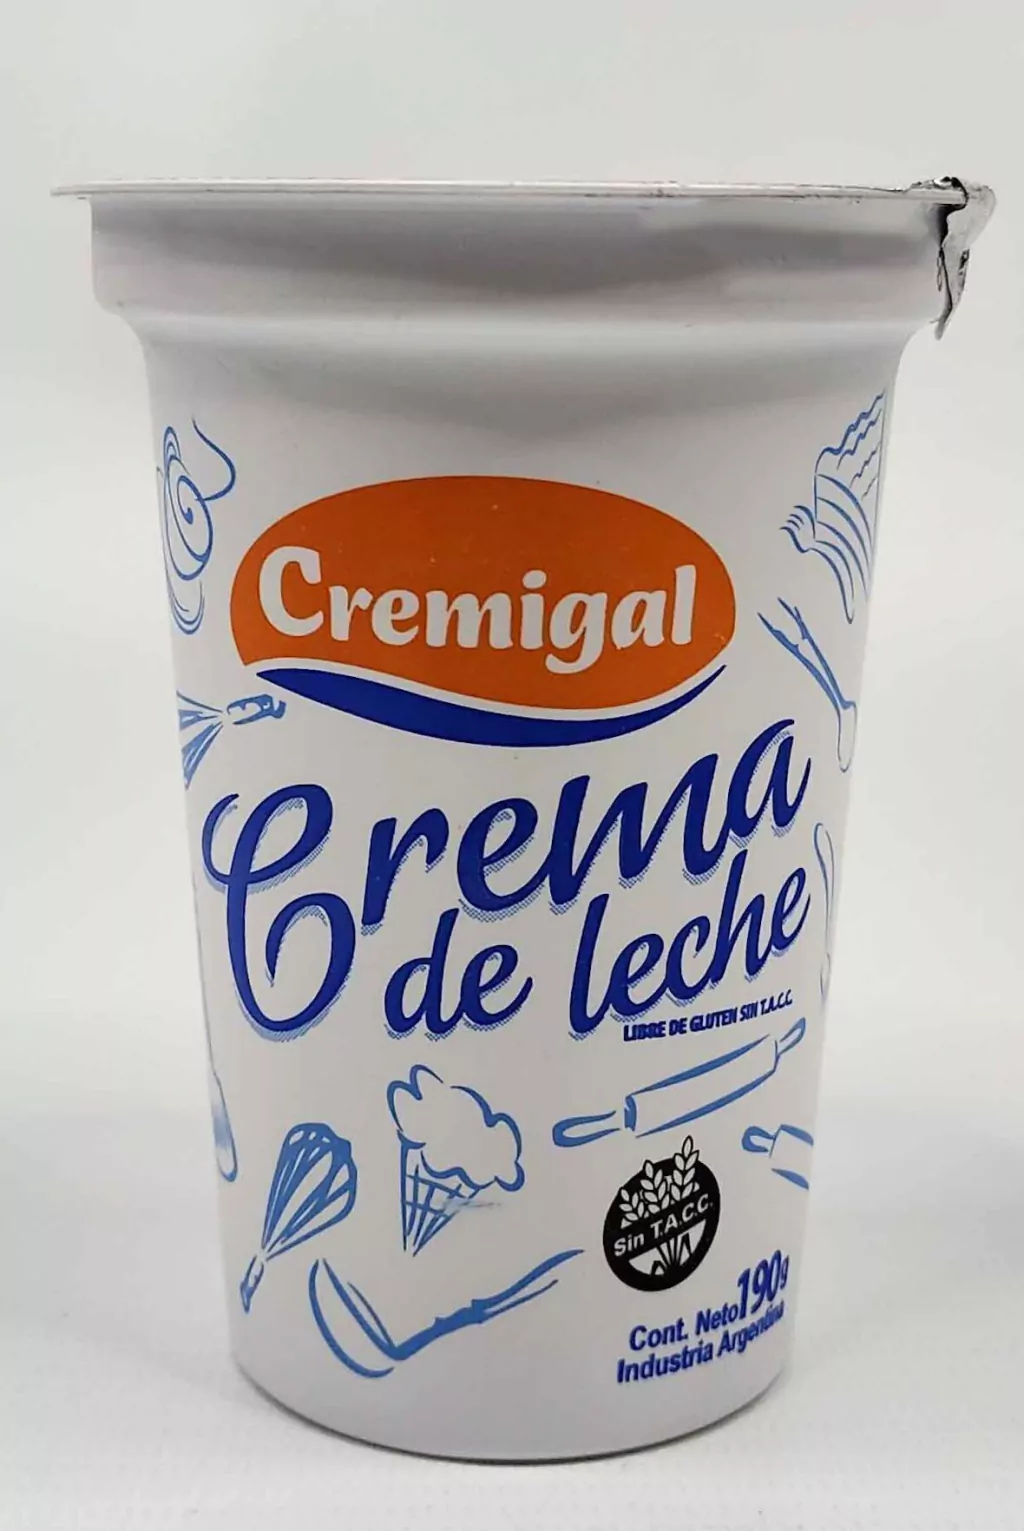 Crema de Leche - Cremigal